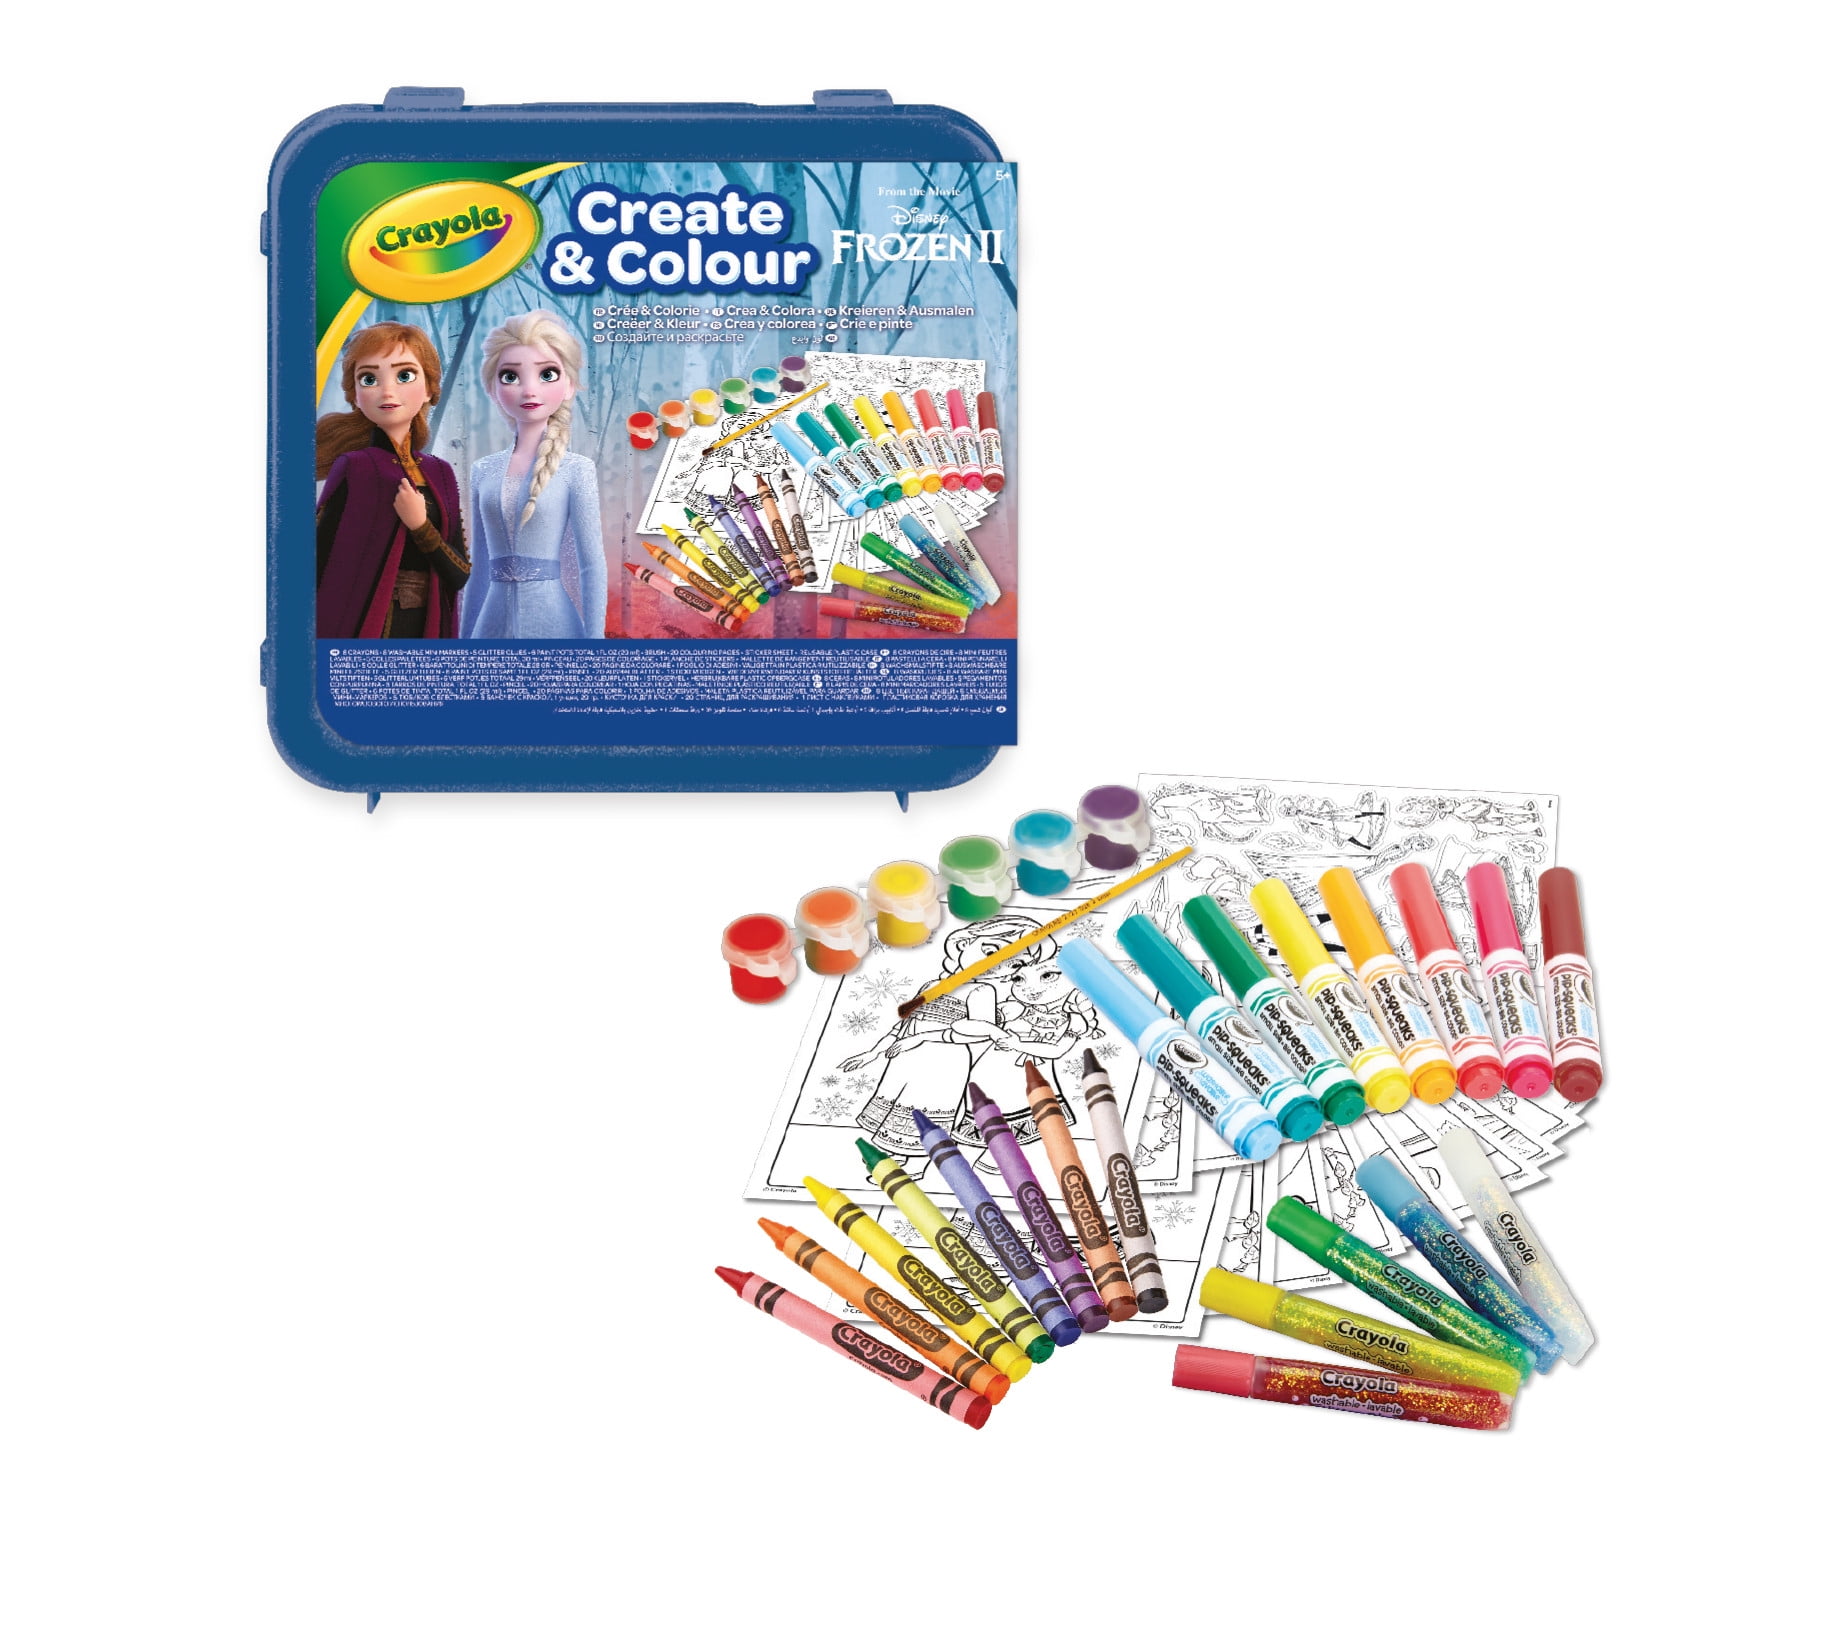 CASE STUDY 4: Crayola Art Case Frozen 2 Inspiration Set